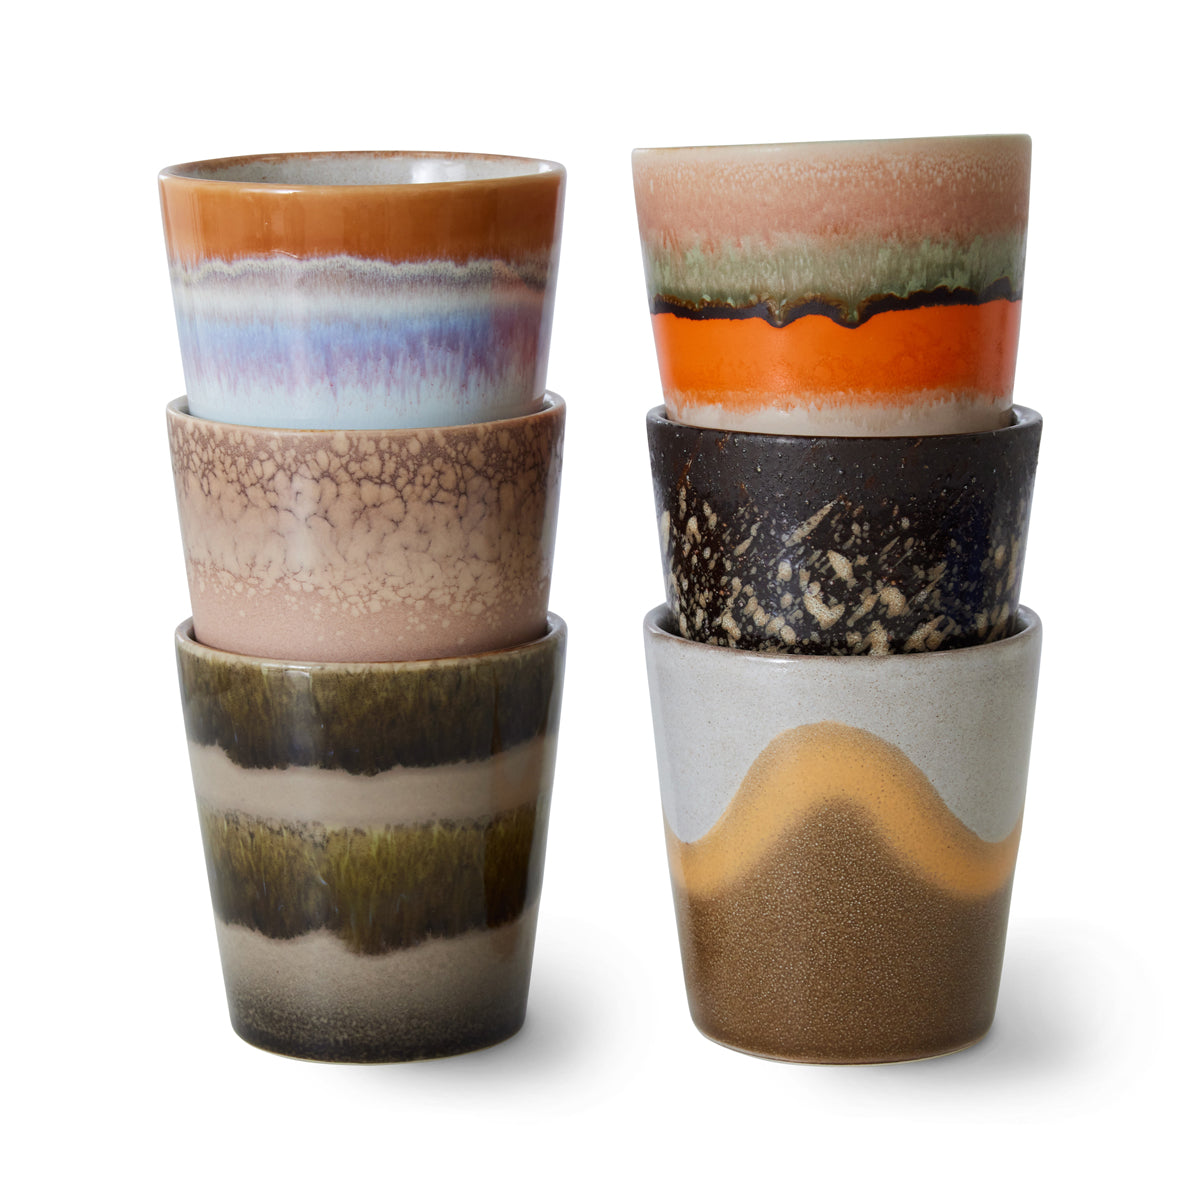 HKLiving 70s Ceramics Coffee Mugs Elements (Set of 6) ACE7212